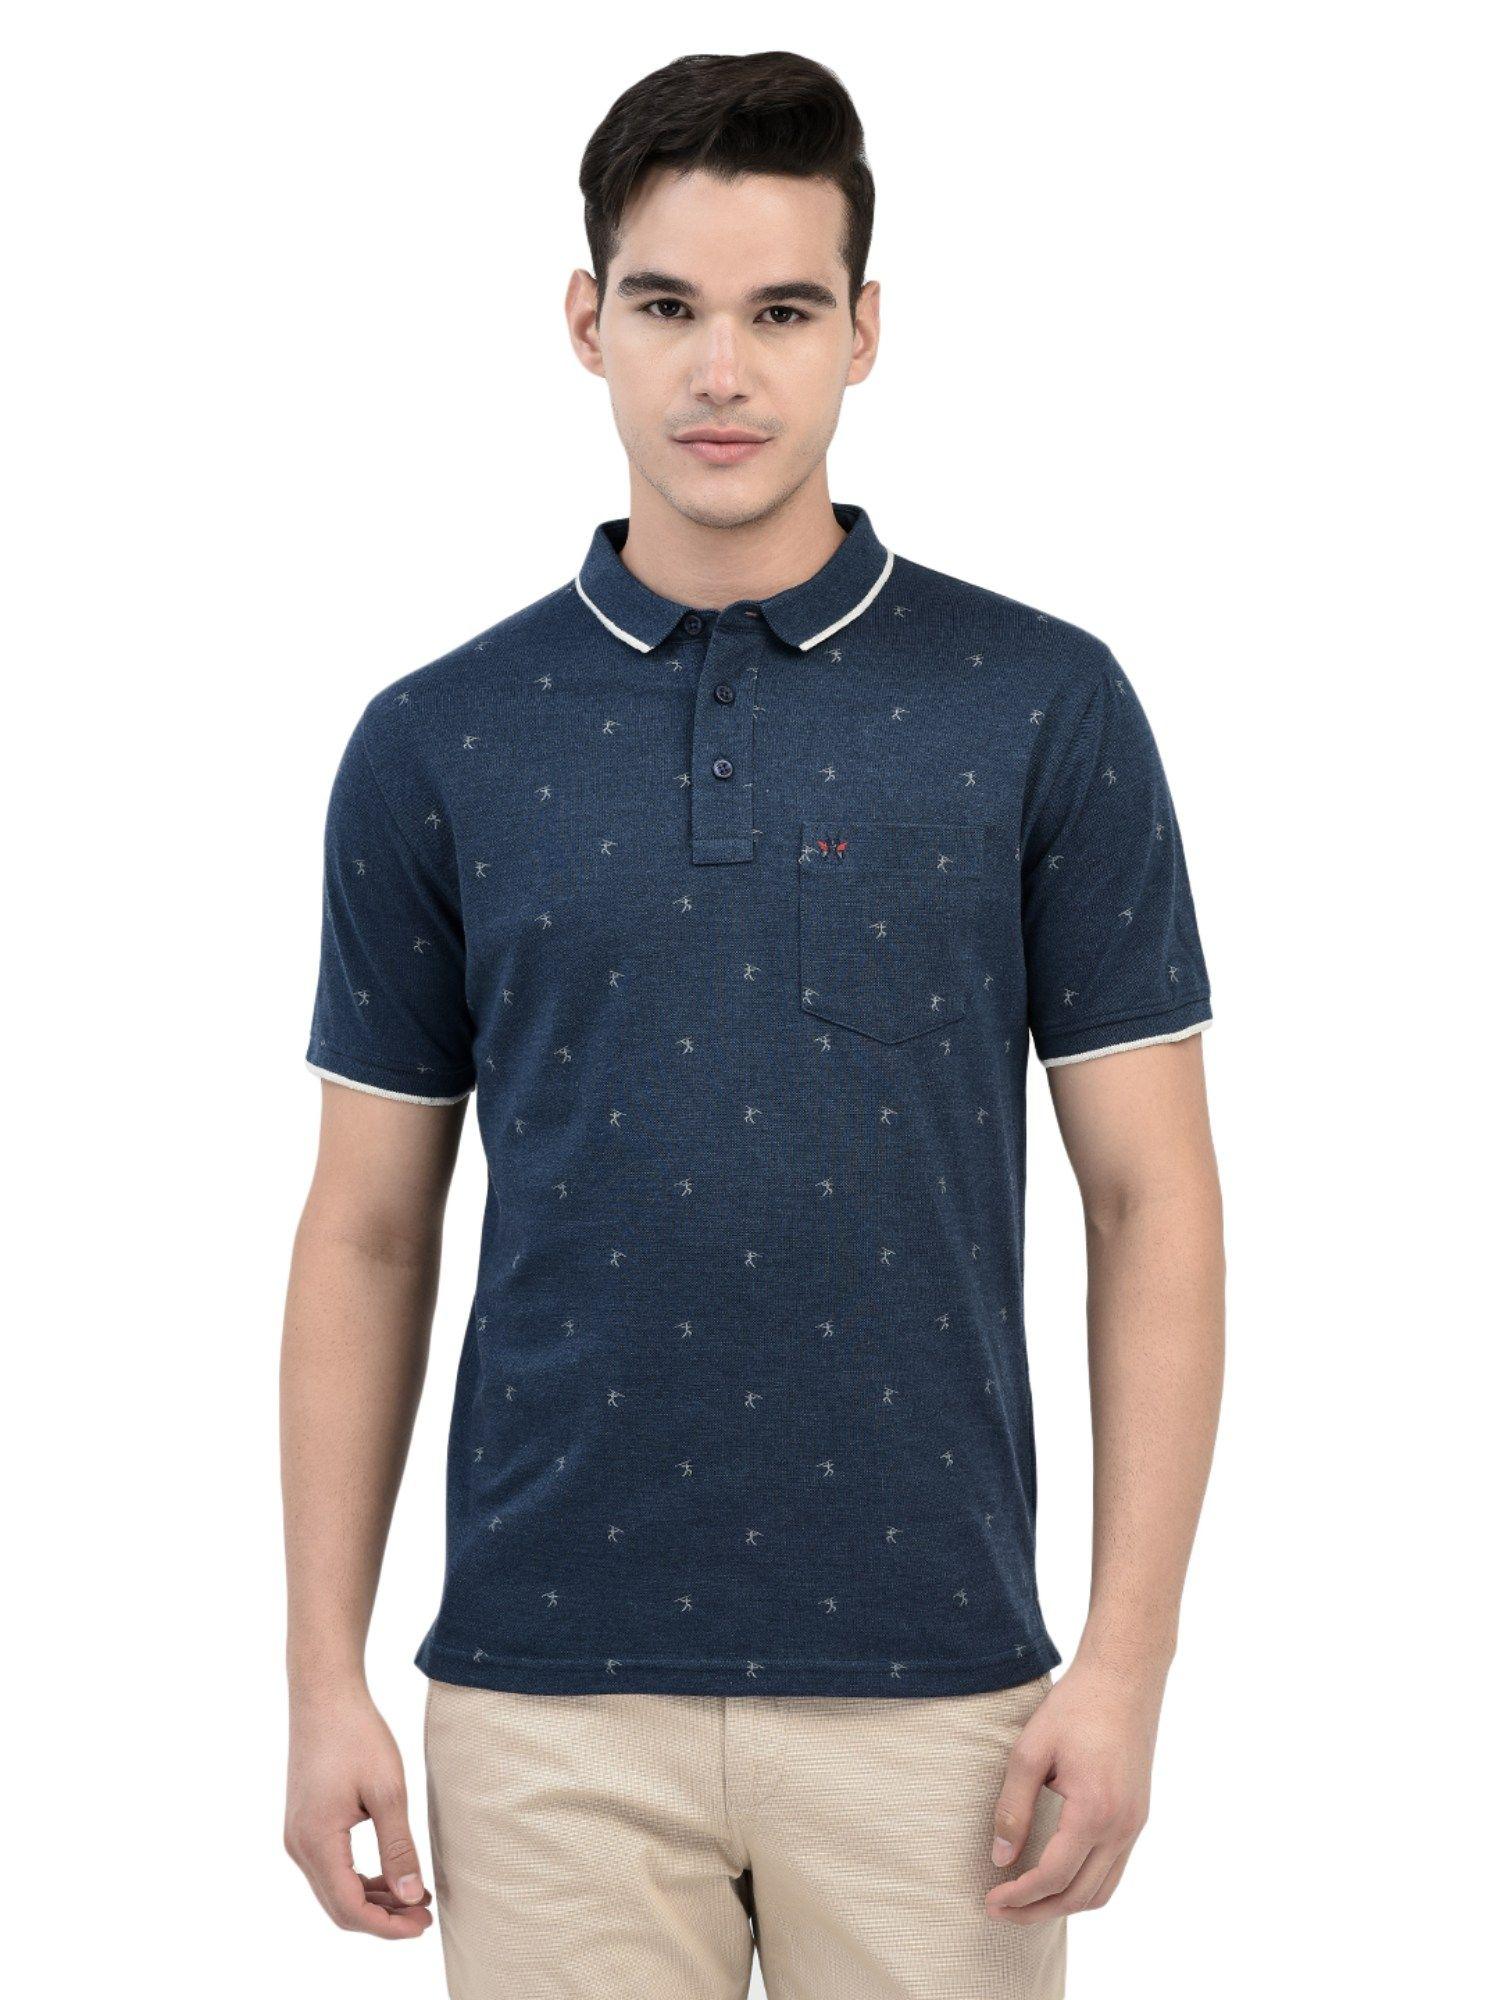 mens navy blue printed polo t-shirt